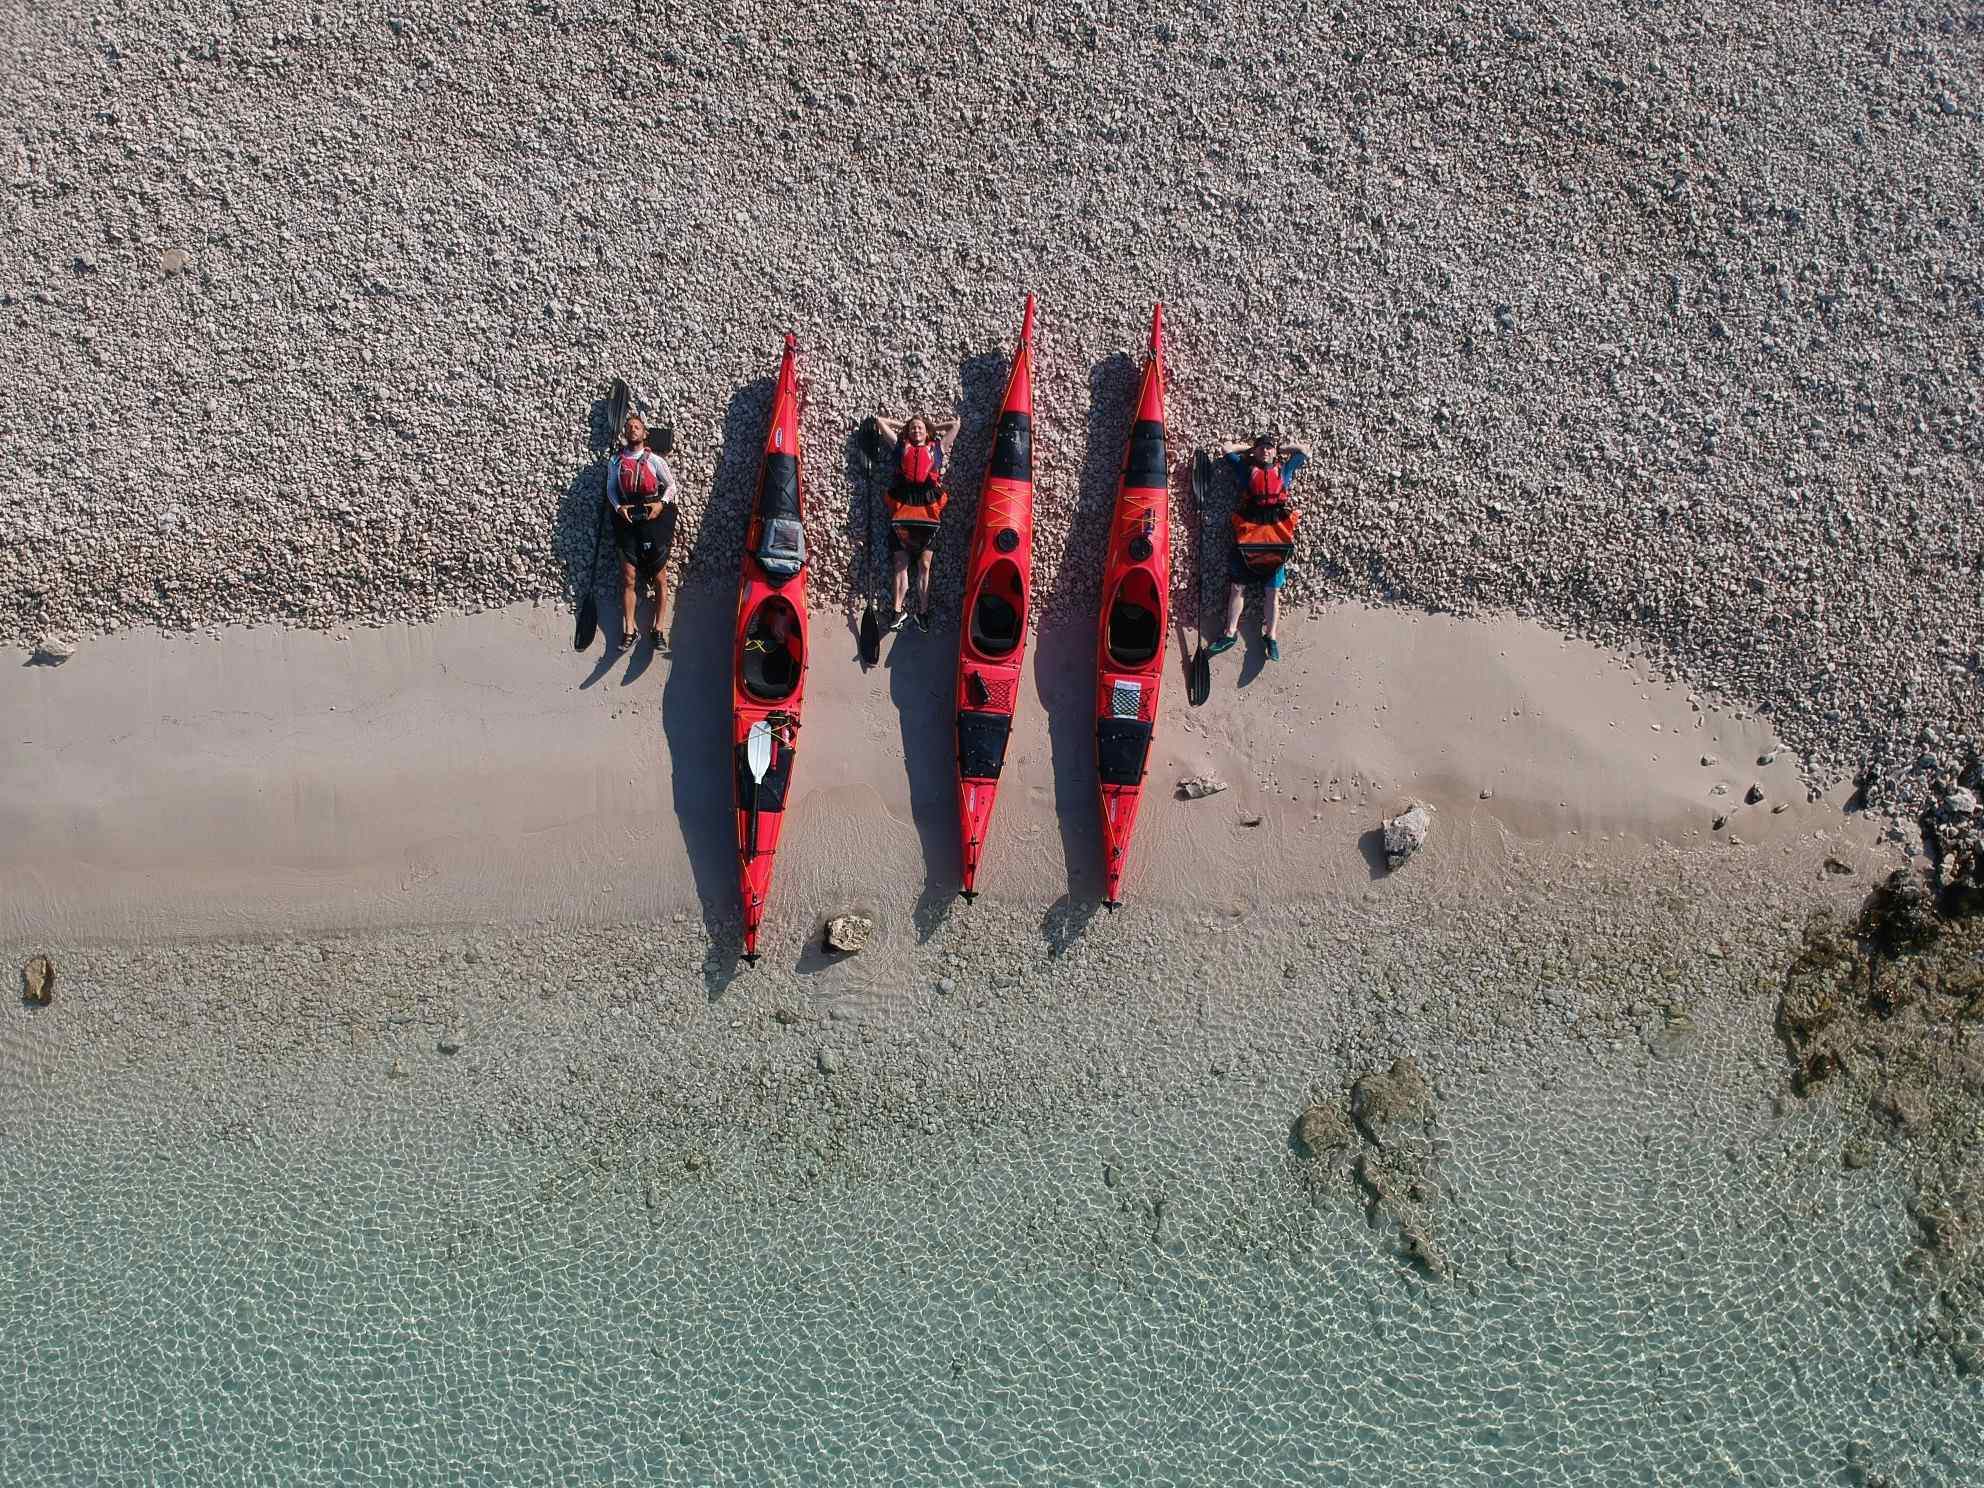 Group kayaking at beach, Croatia. Photo: Host/Red Adventure